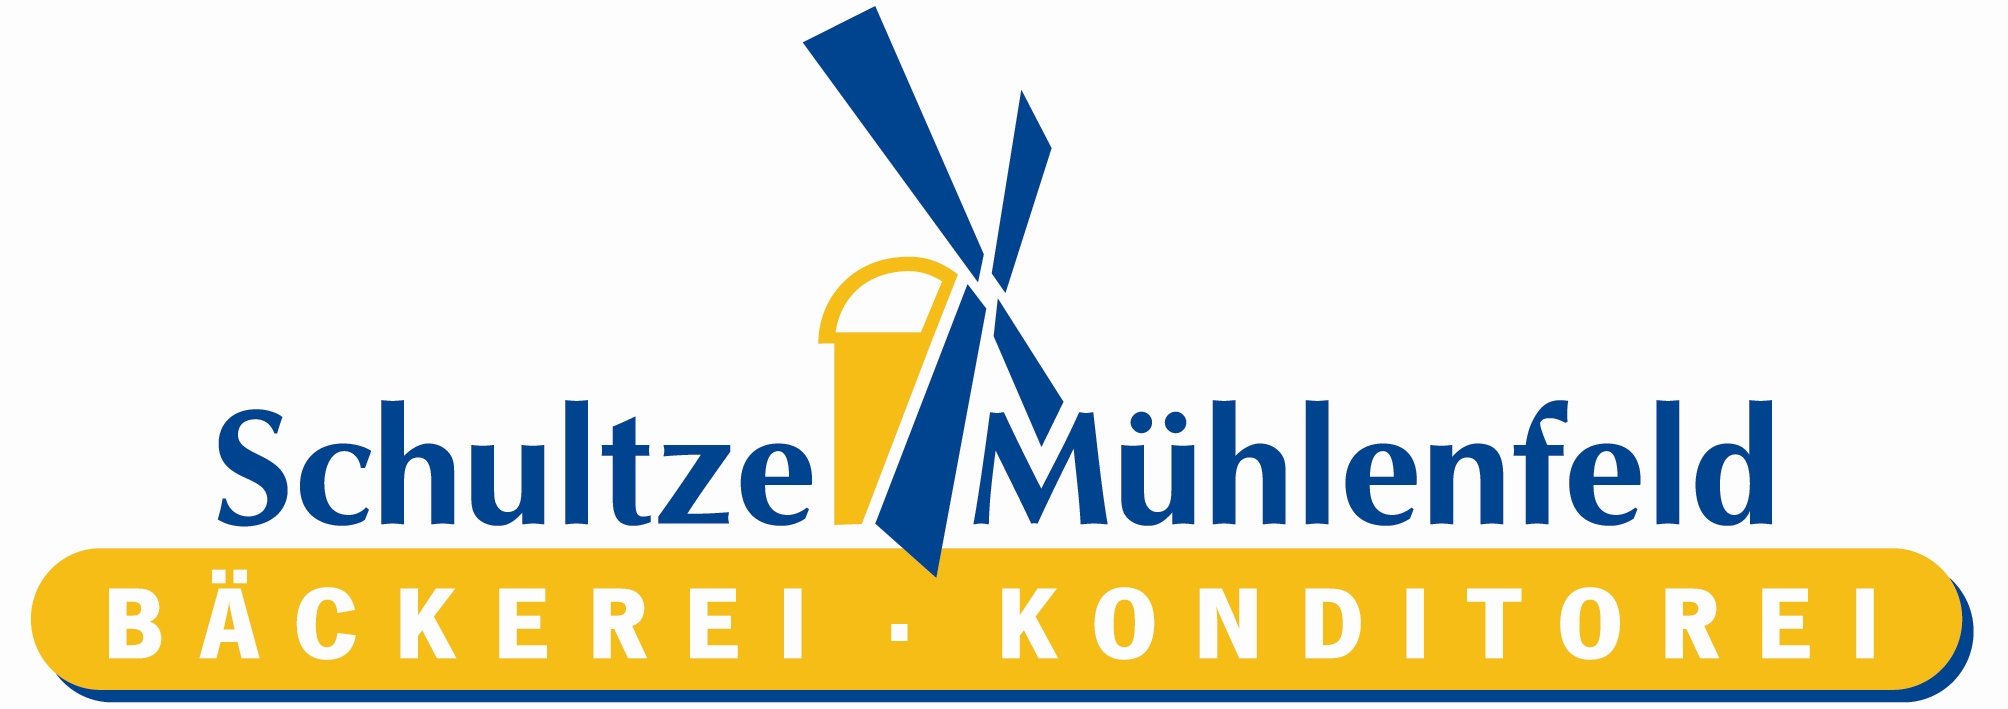 Schultze Mühlenfeld